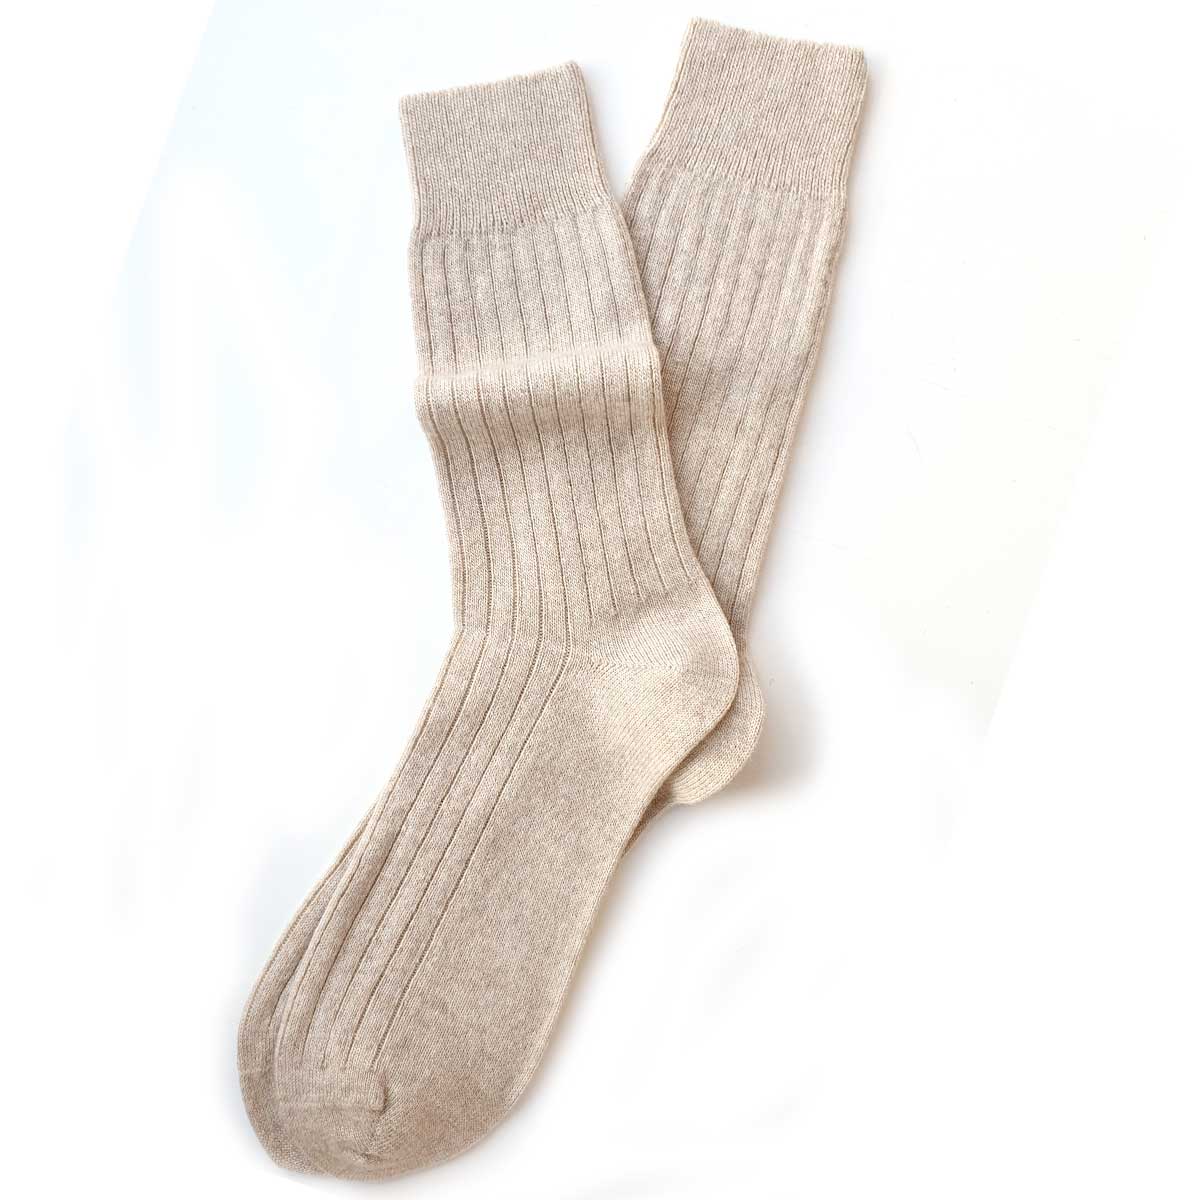 SOCKS: Men's wool socks with cashmere